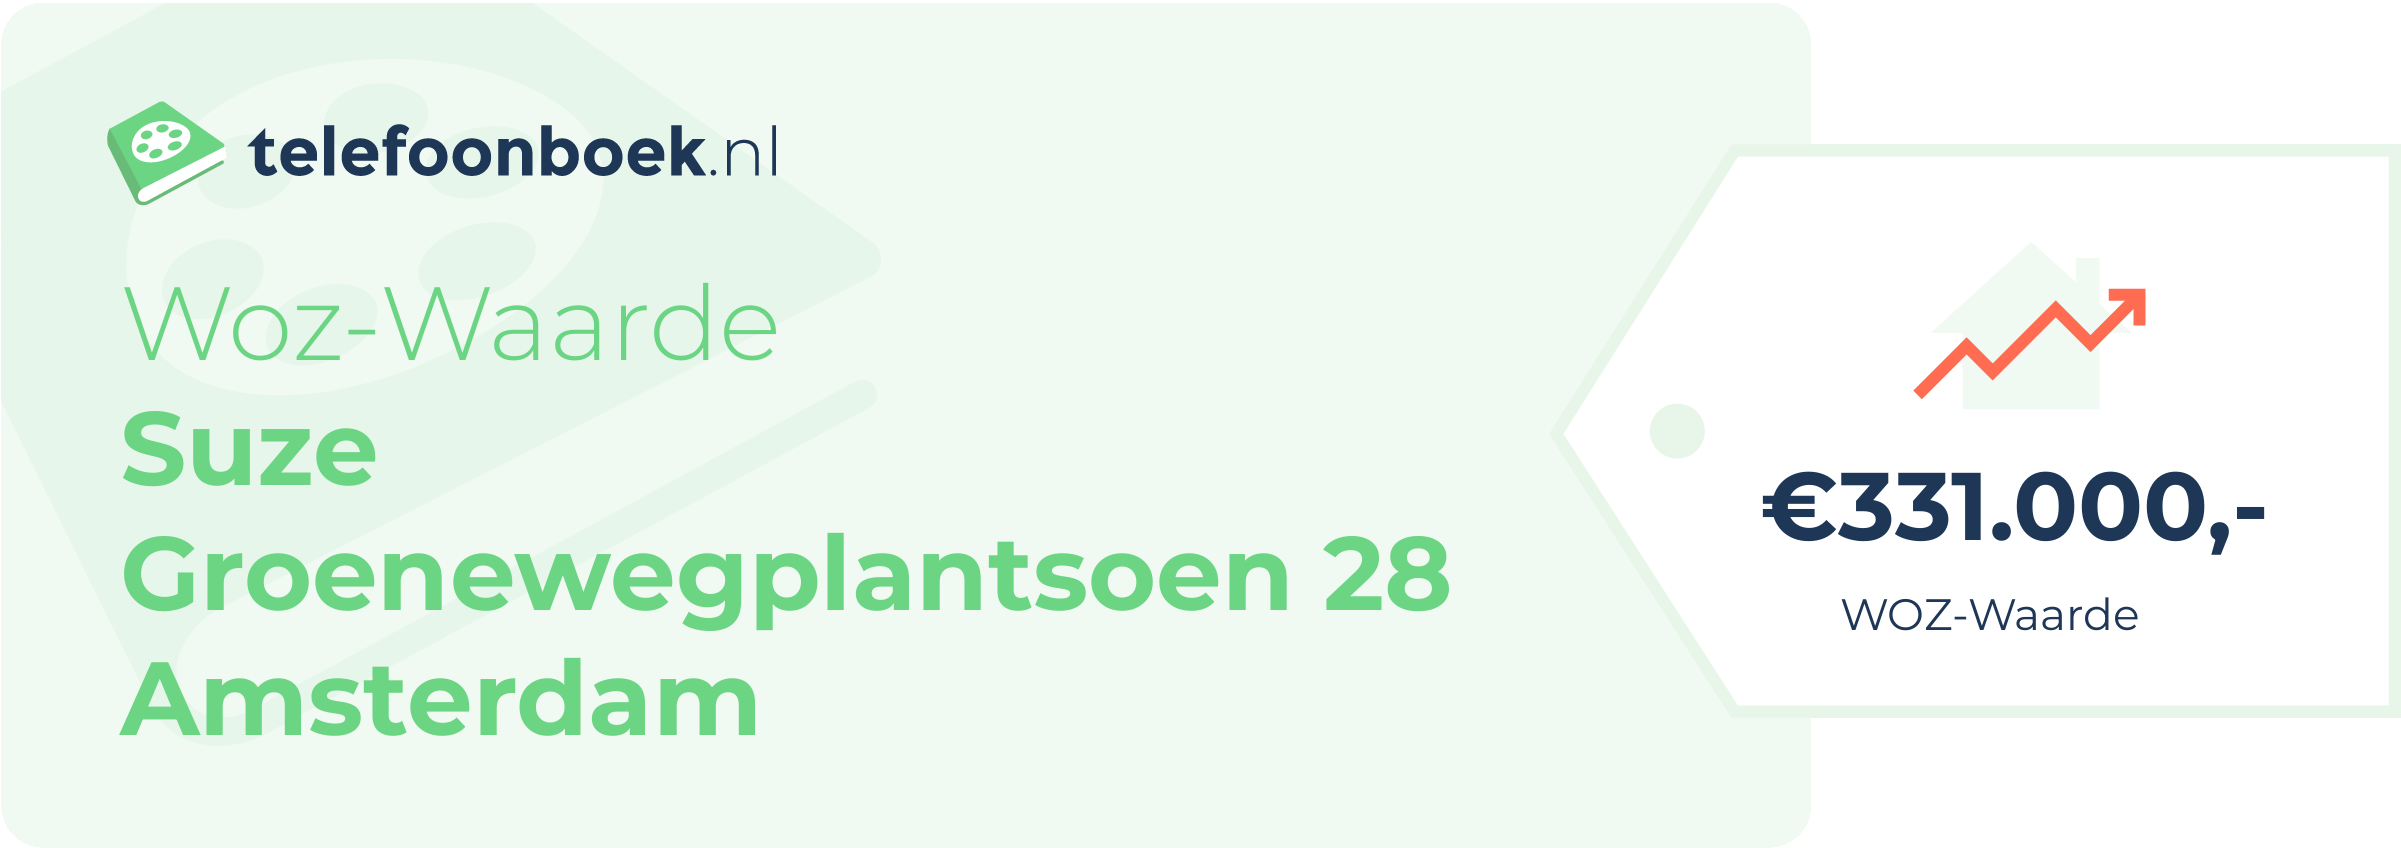 WOZ-waarde Suze Groenewegplantsoen 28 Amsterdam